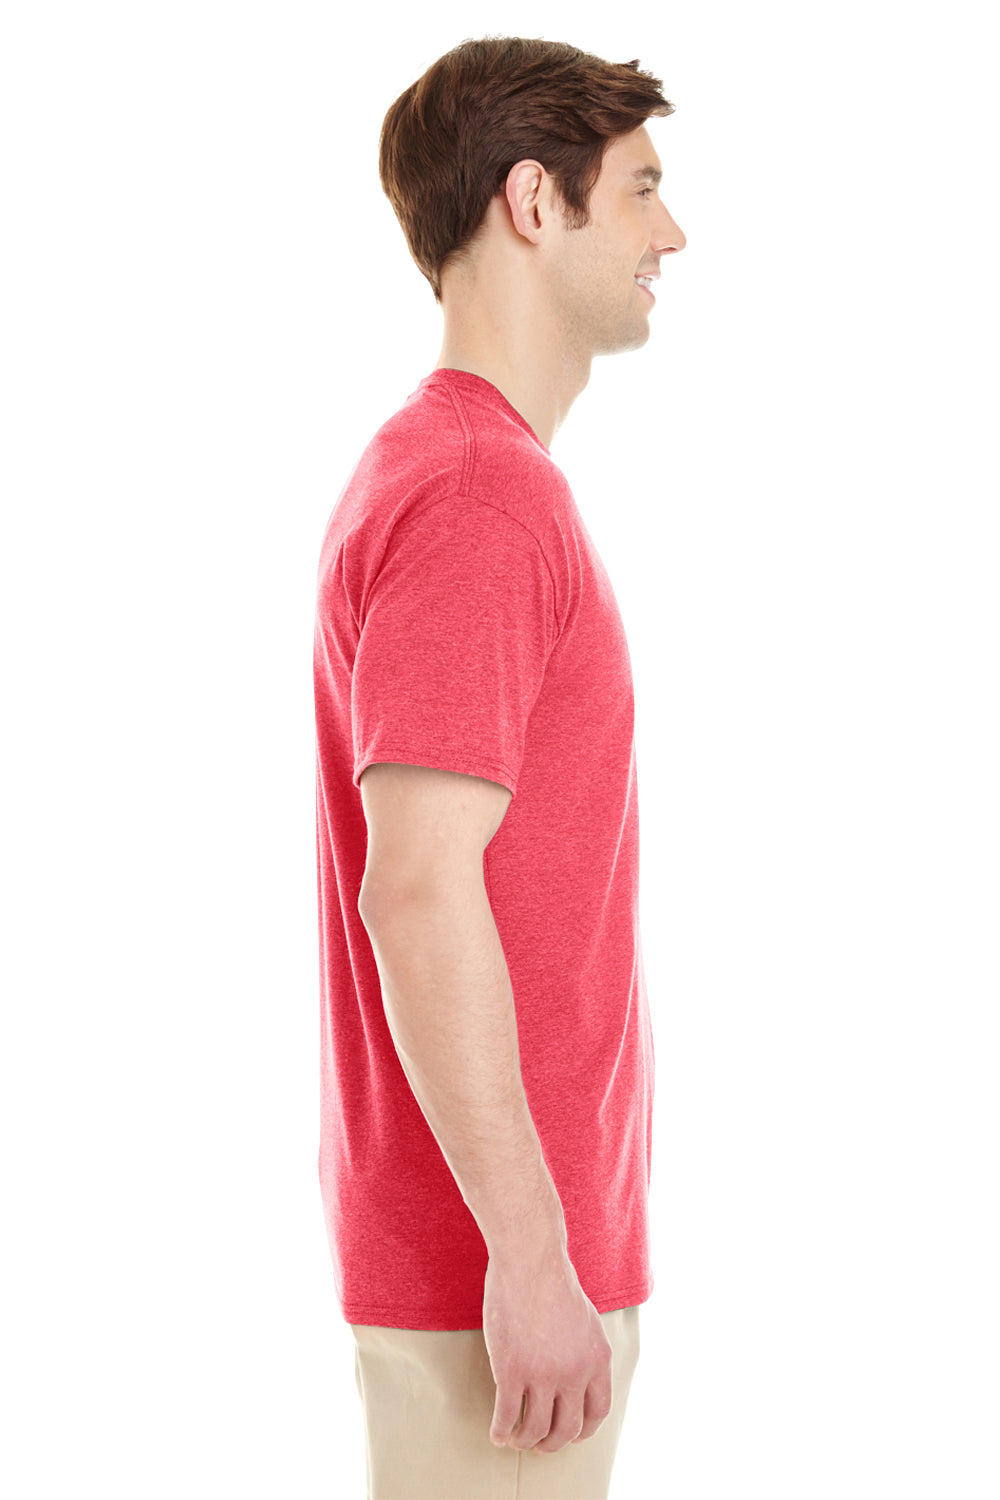 Jerzees 601MR Mens Short Sleeve Crewneck T-Shirt Heather Red Side